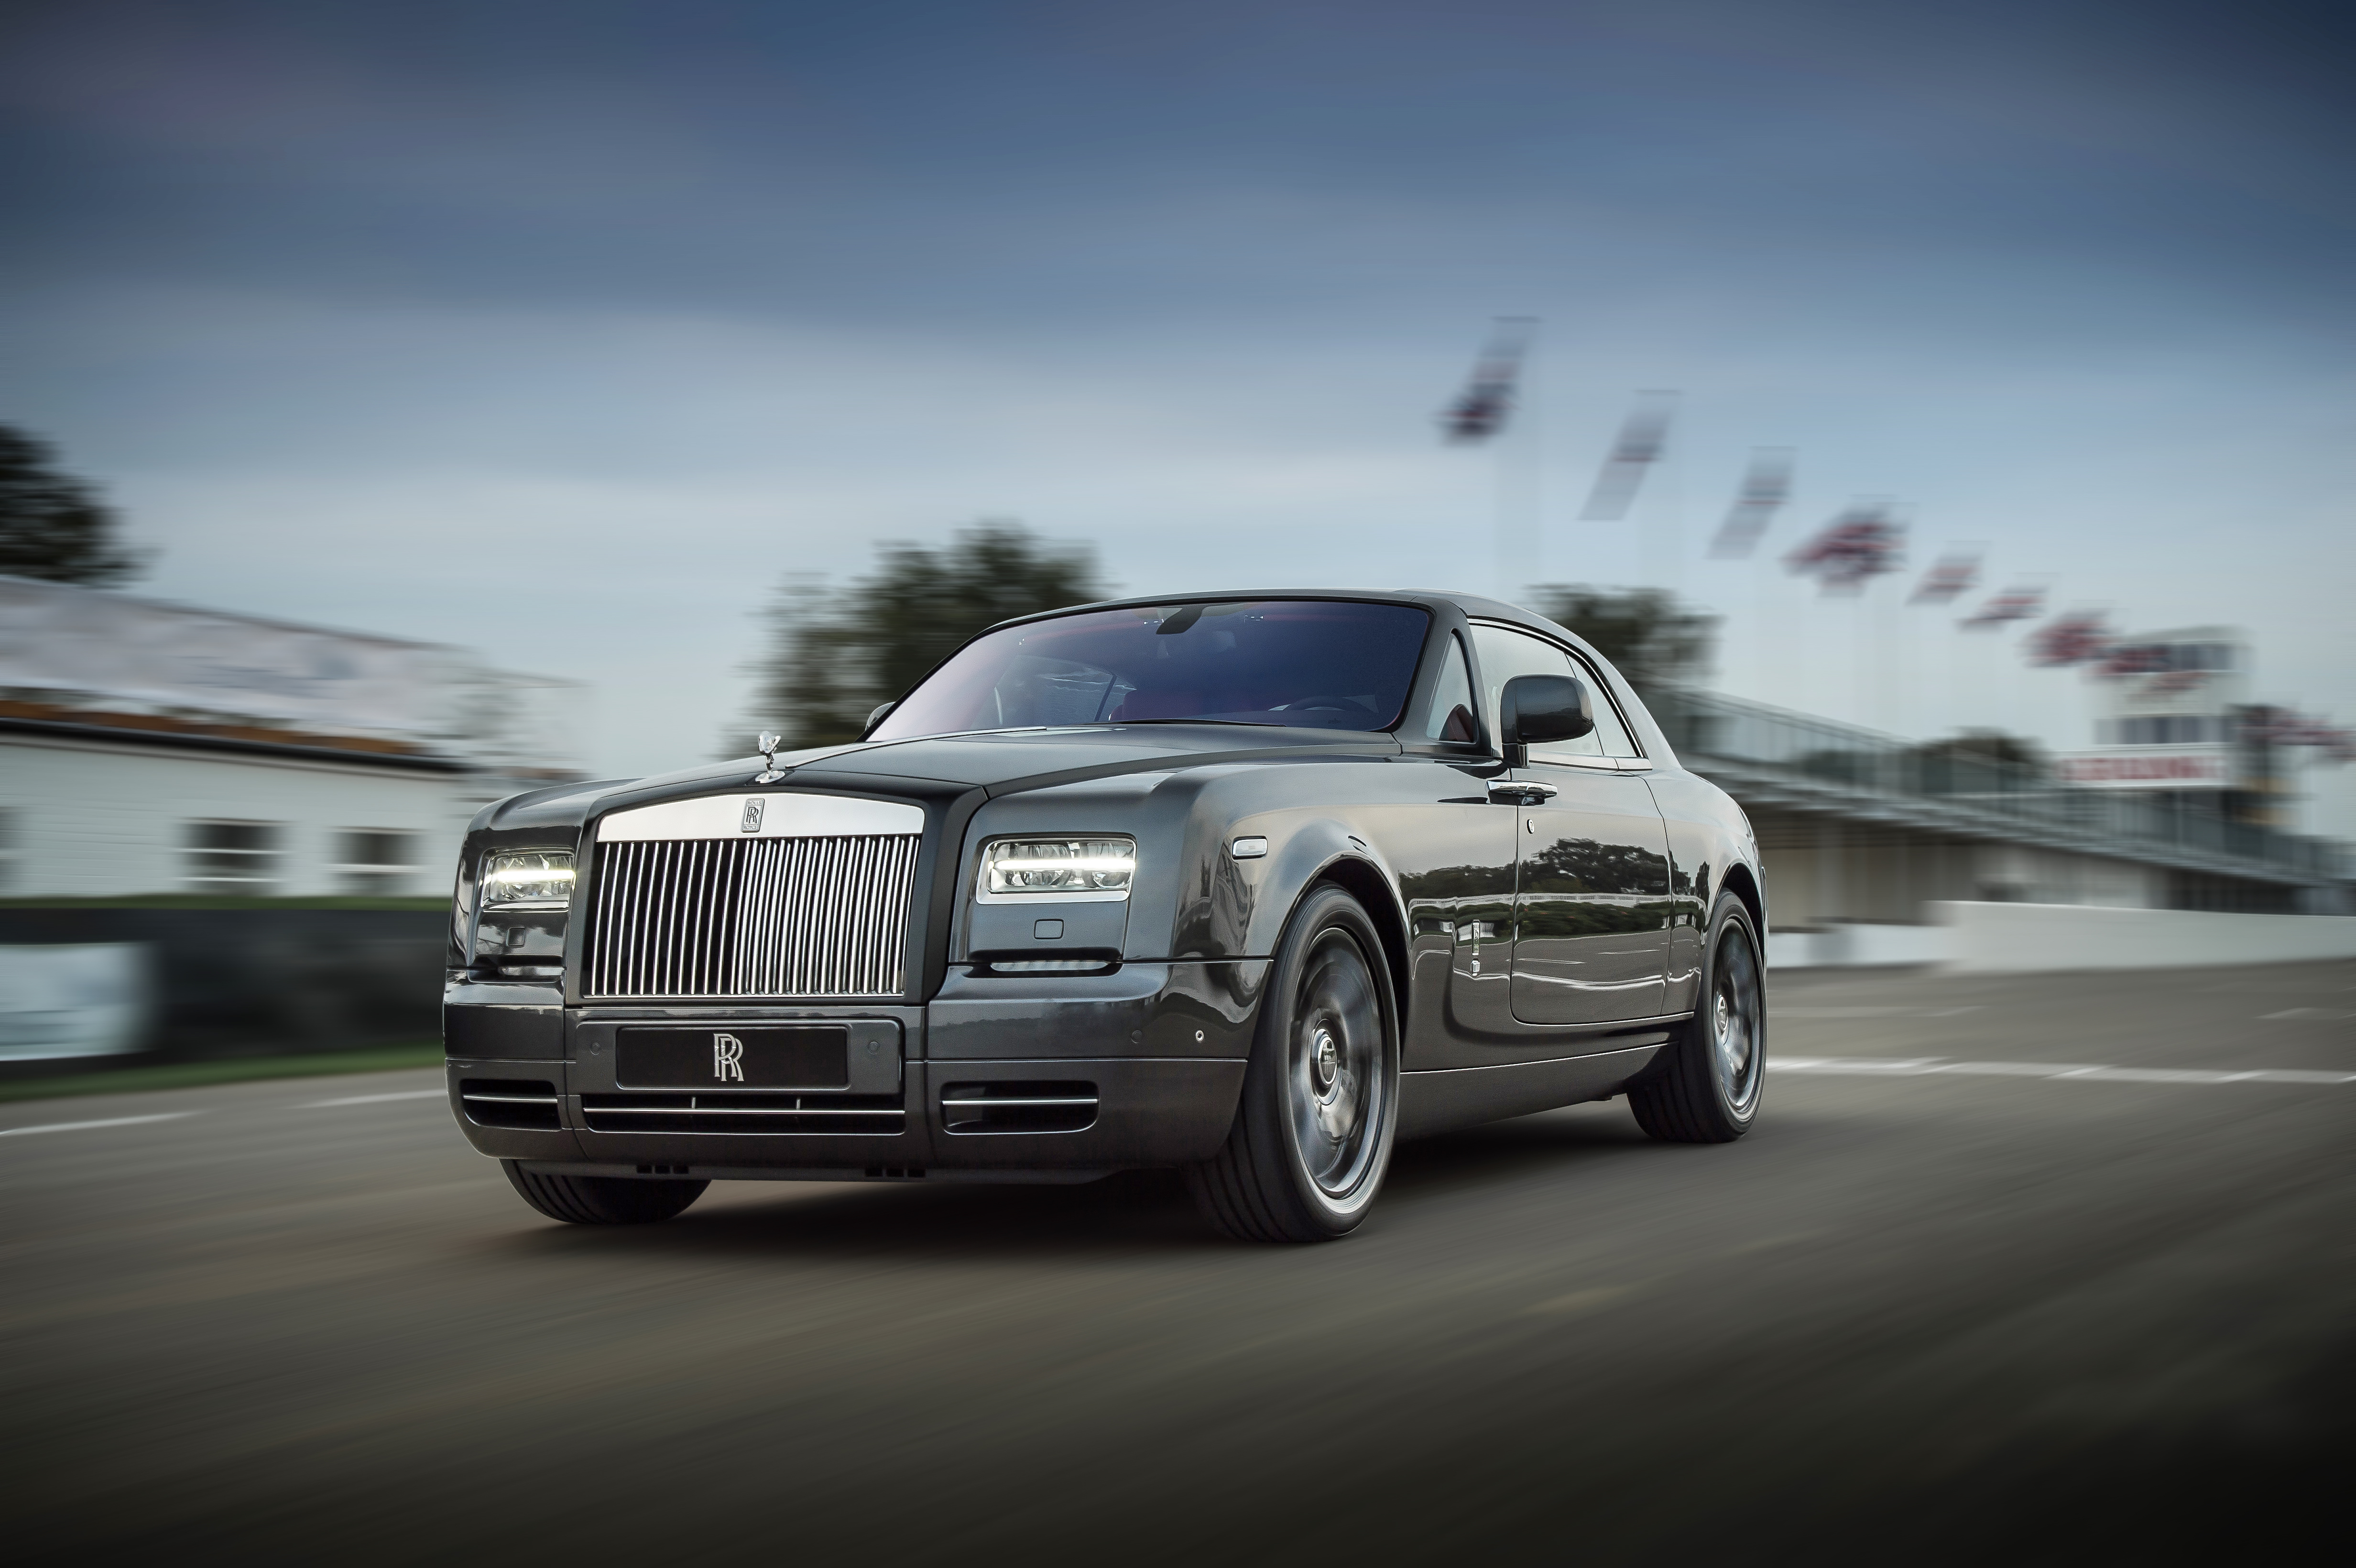 Car Rolls Royce Luxury Cars British Cars Frontal View Headlights Motion Blur Driving Sky Clouds Vehi 4928x3280